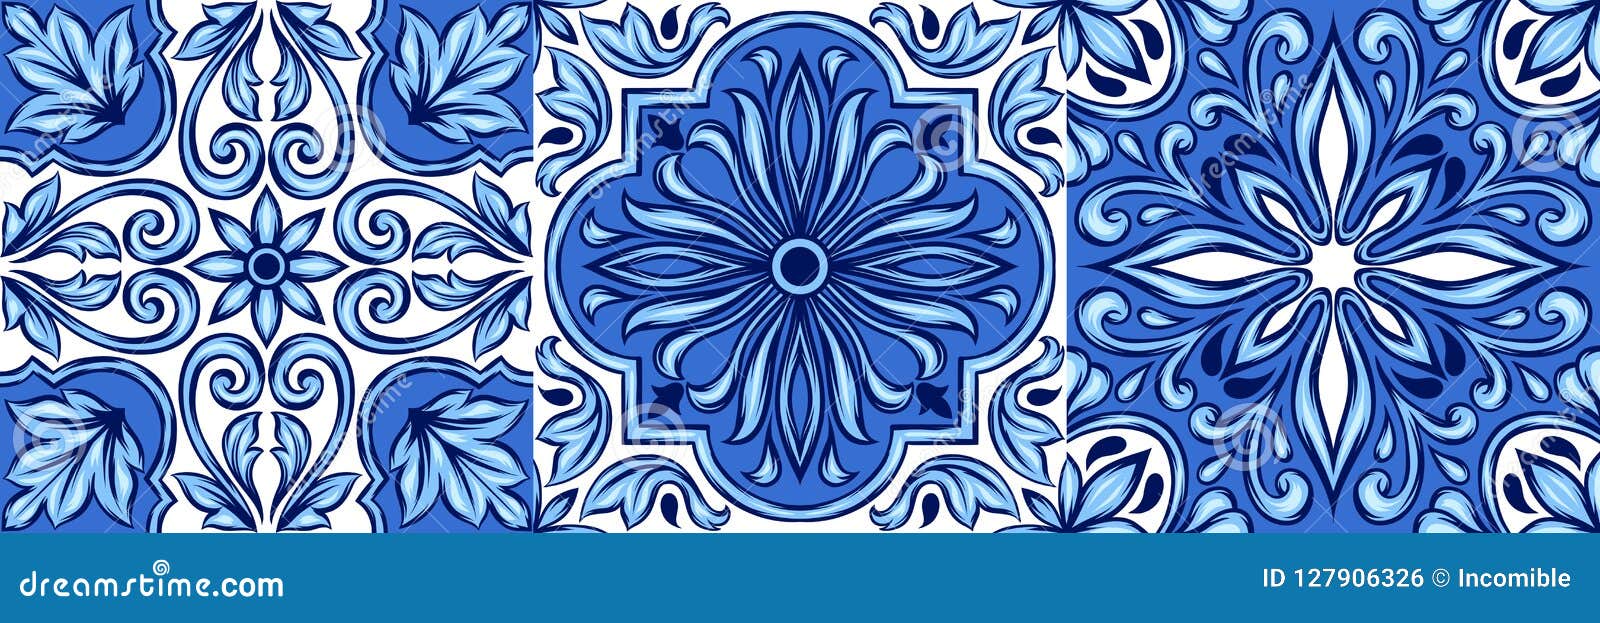 portuguese azulejo ceramic tile pattern.